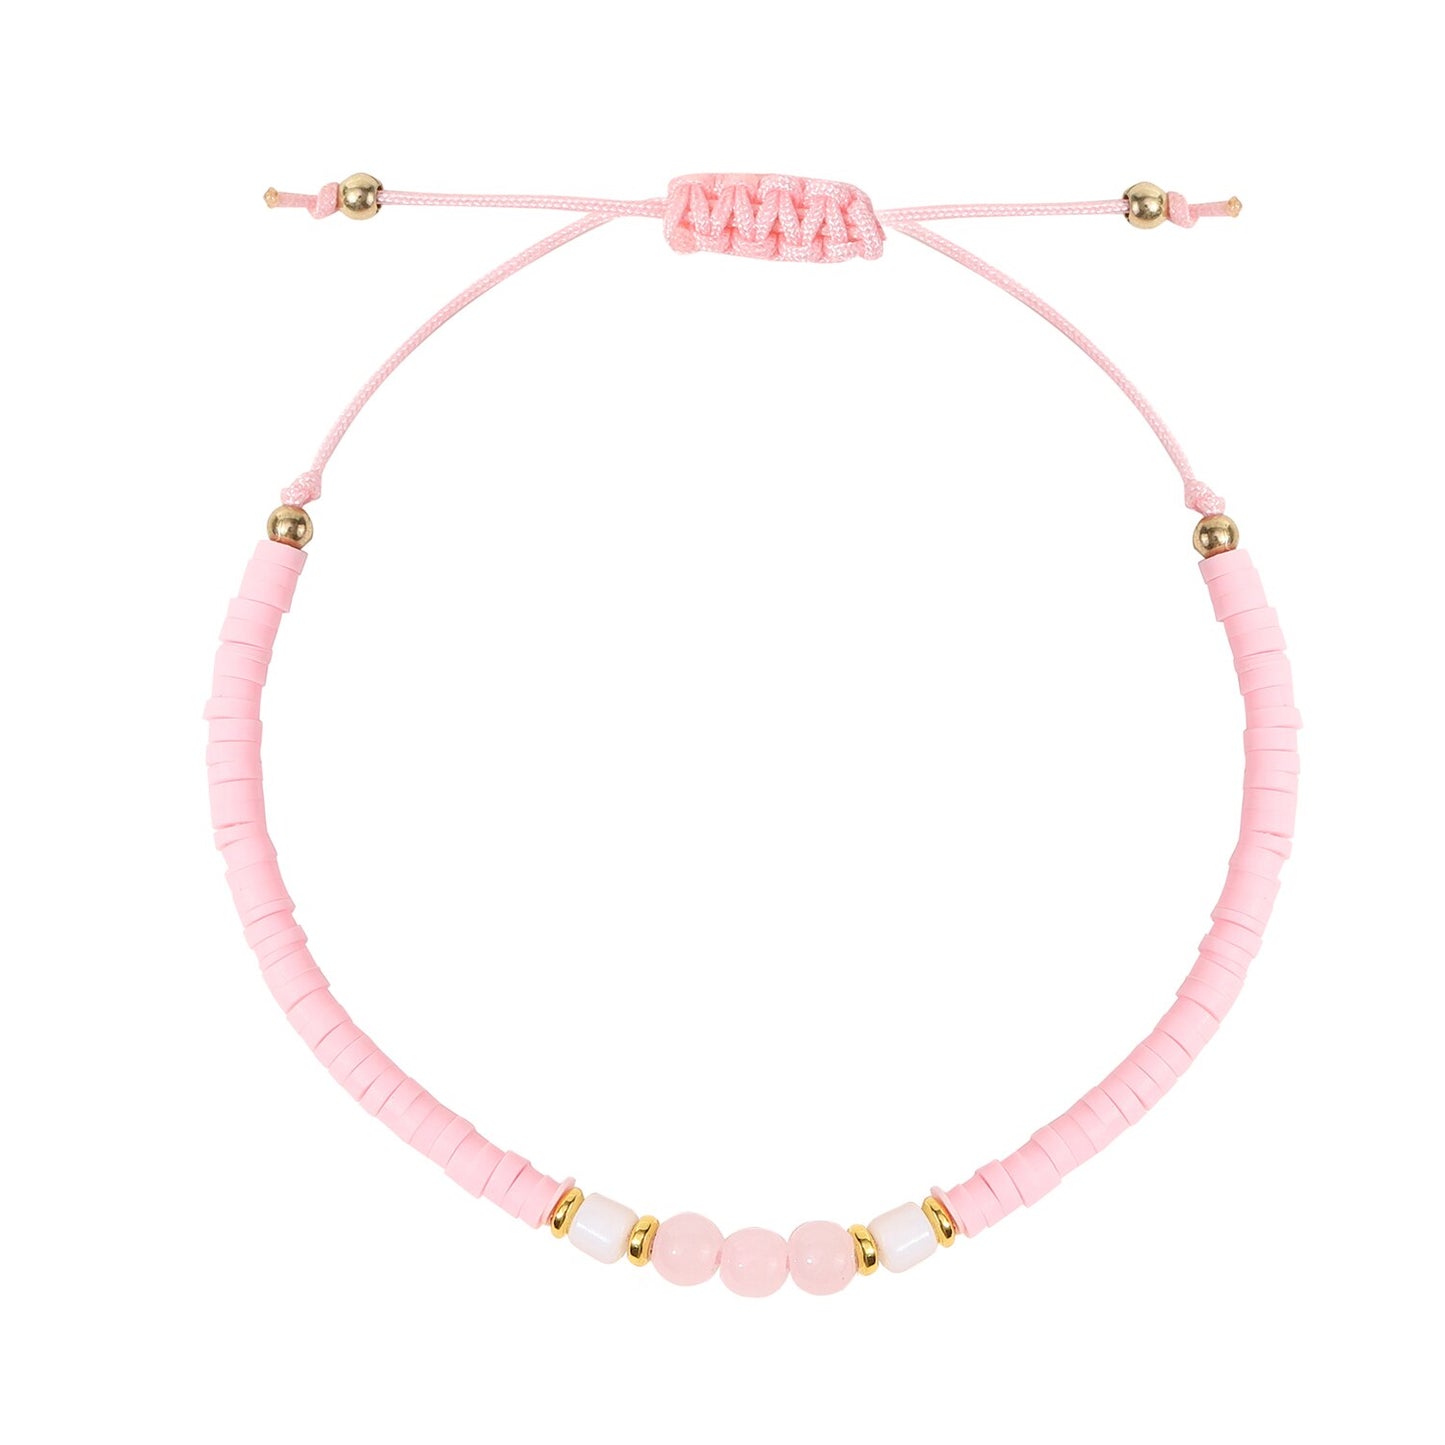 12pcs/lot Polymer Clay Stackable Charms Bracelets Boho Crystal Glass Beads Bracelet Anklet for Women Wholesale Jewelry